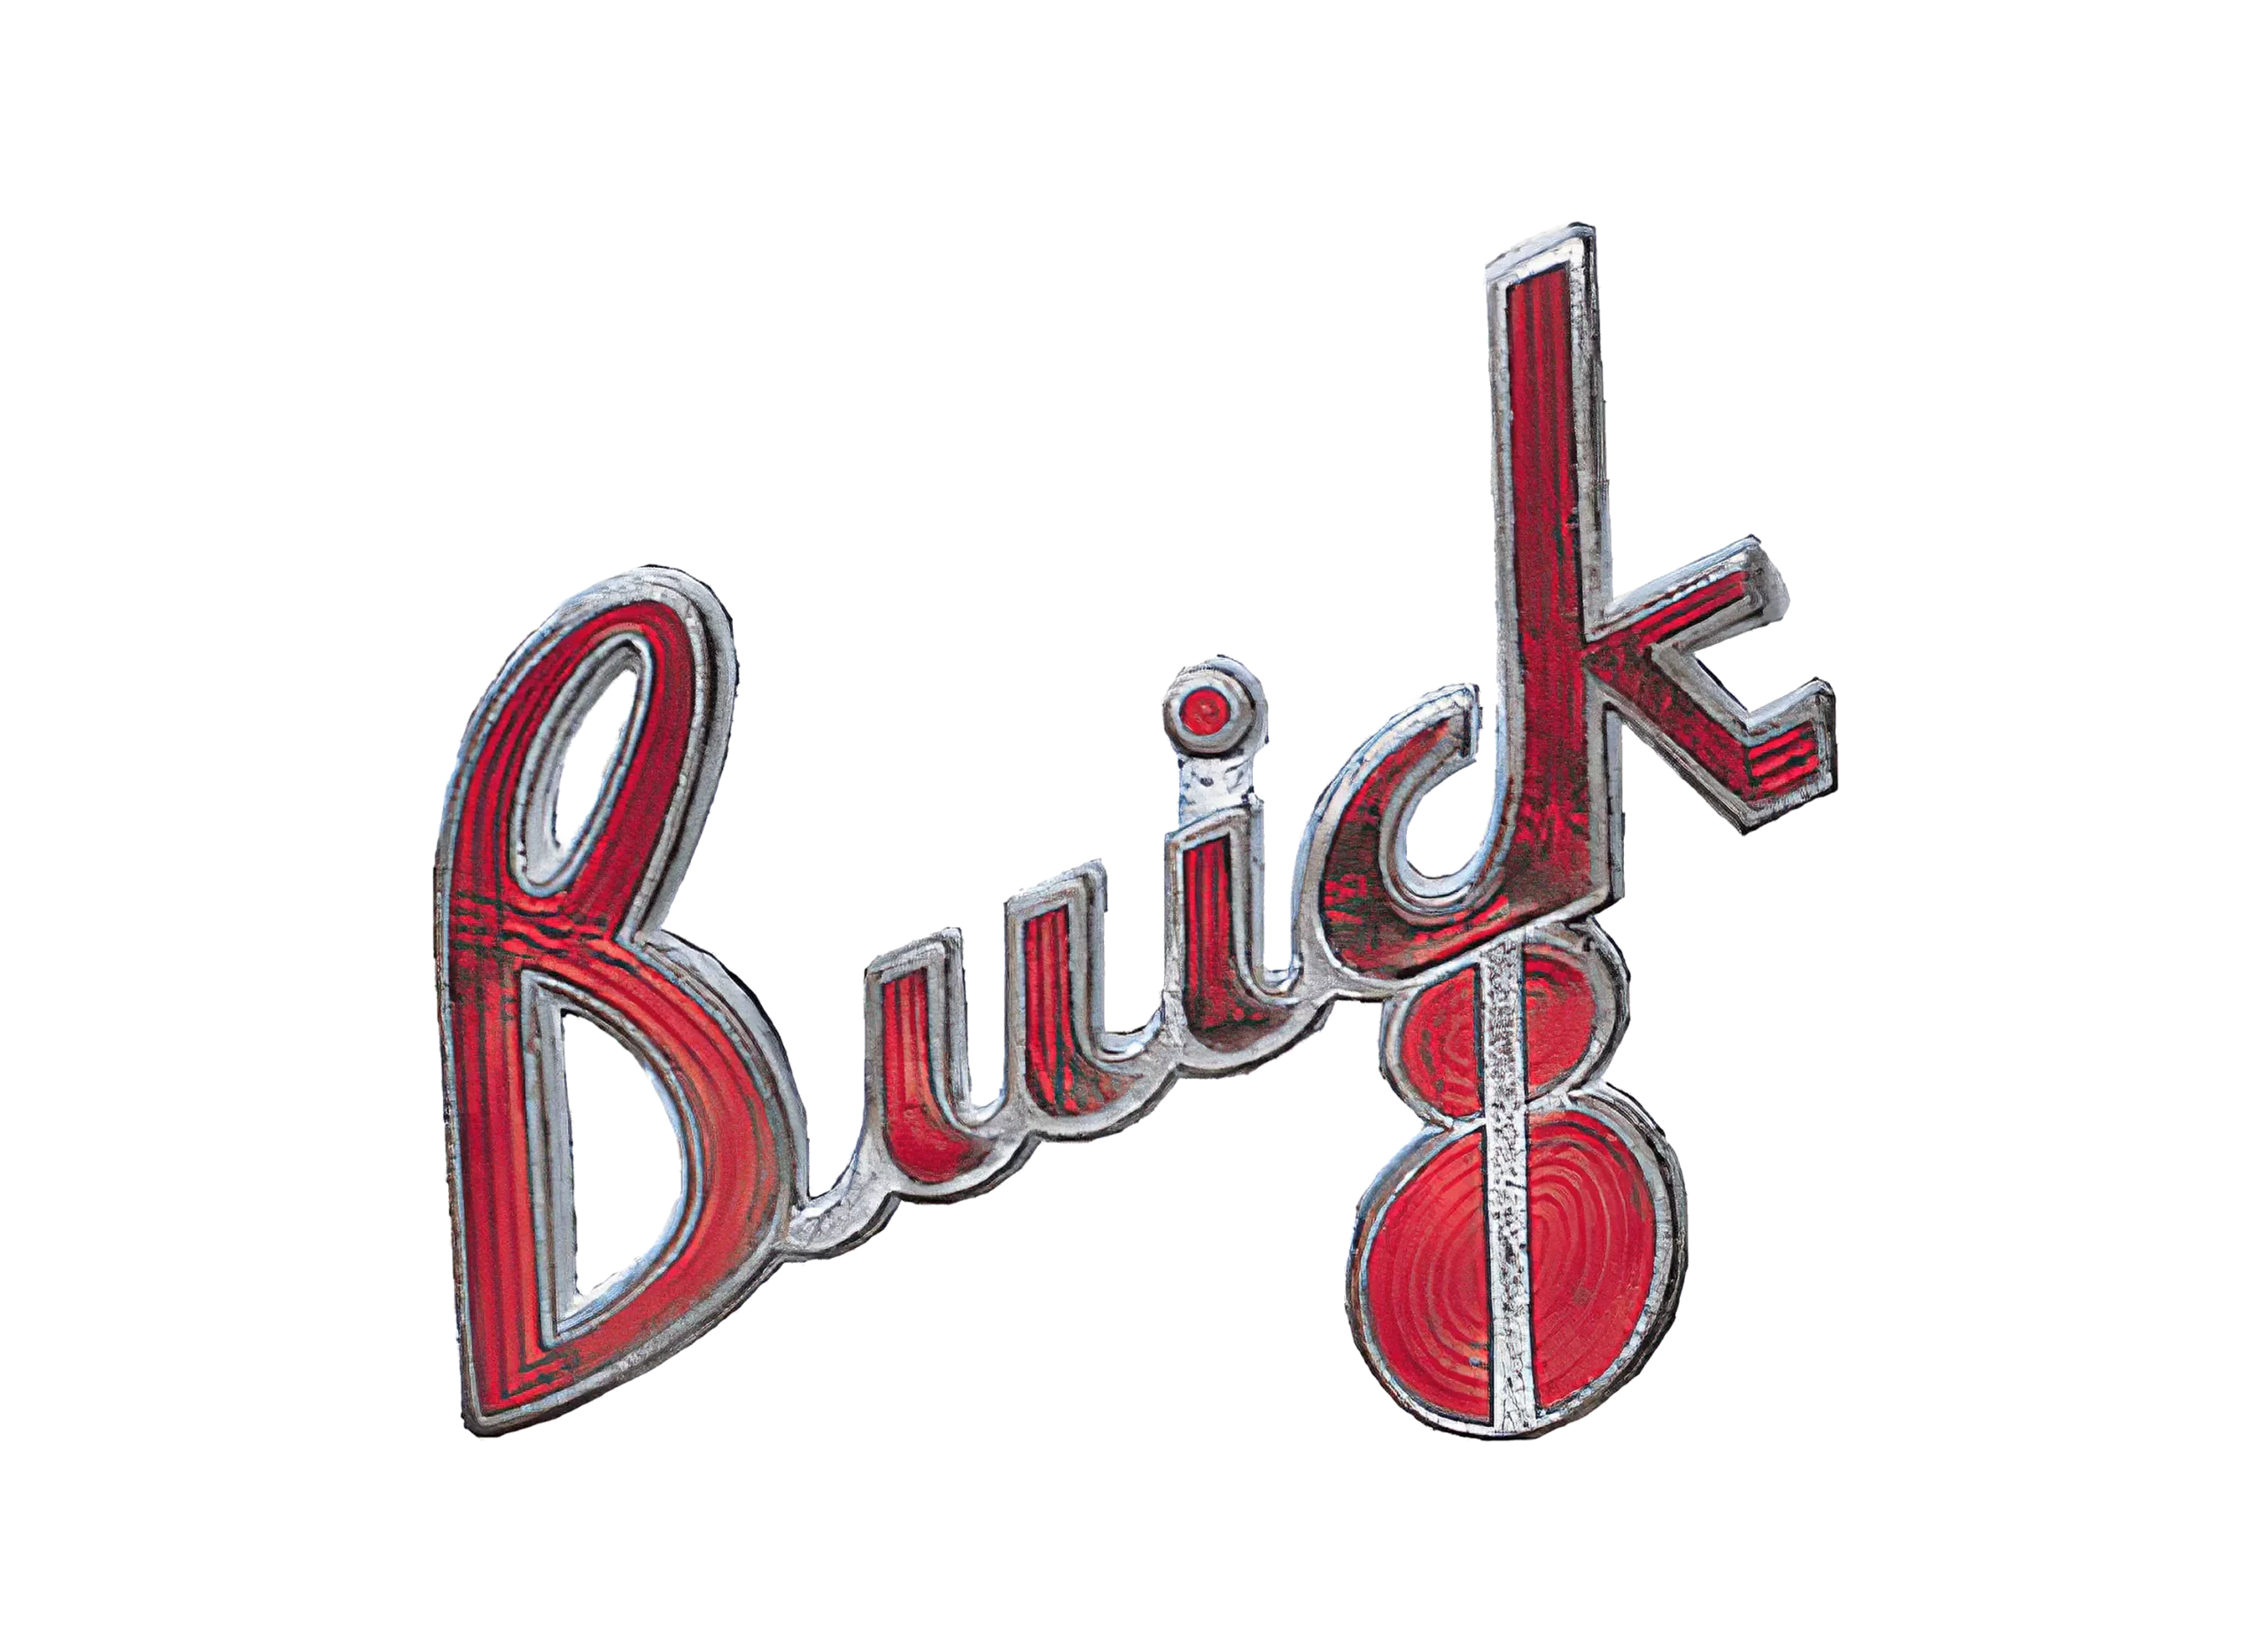 Buick logo 1930-1937